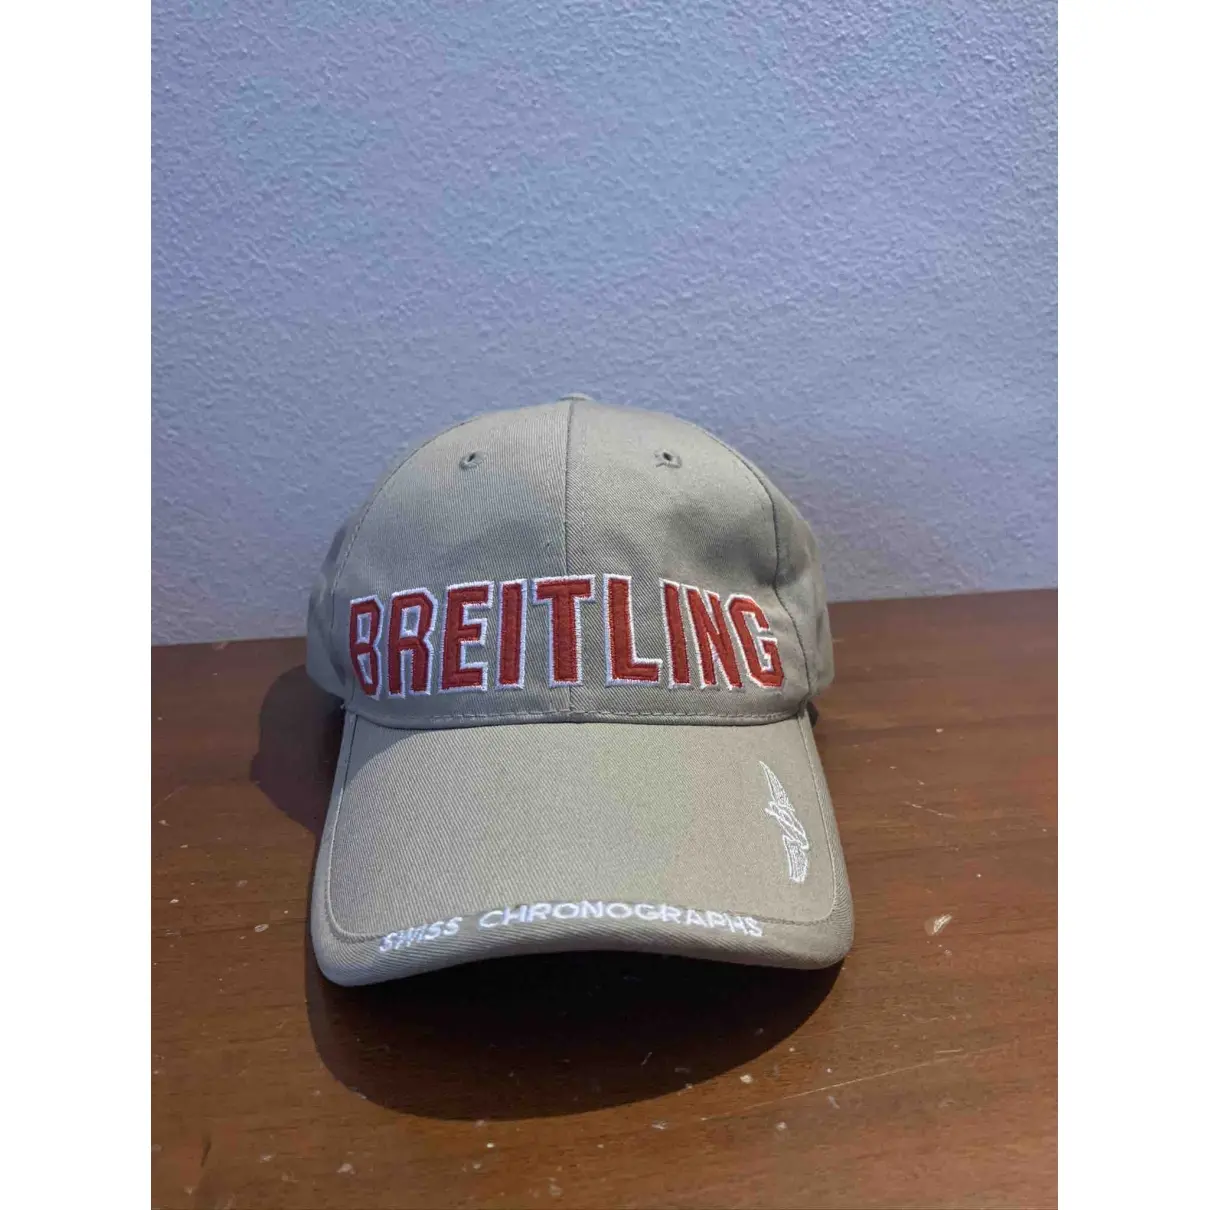 Buy Breitling Hat online